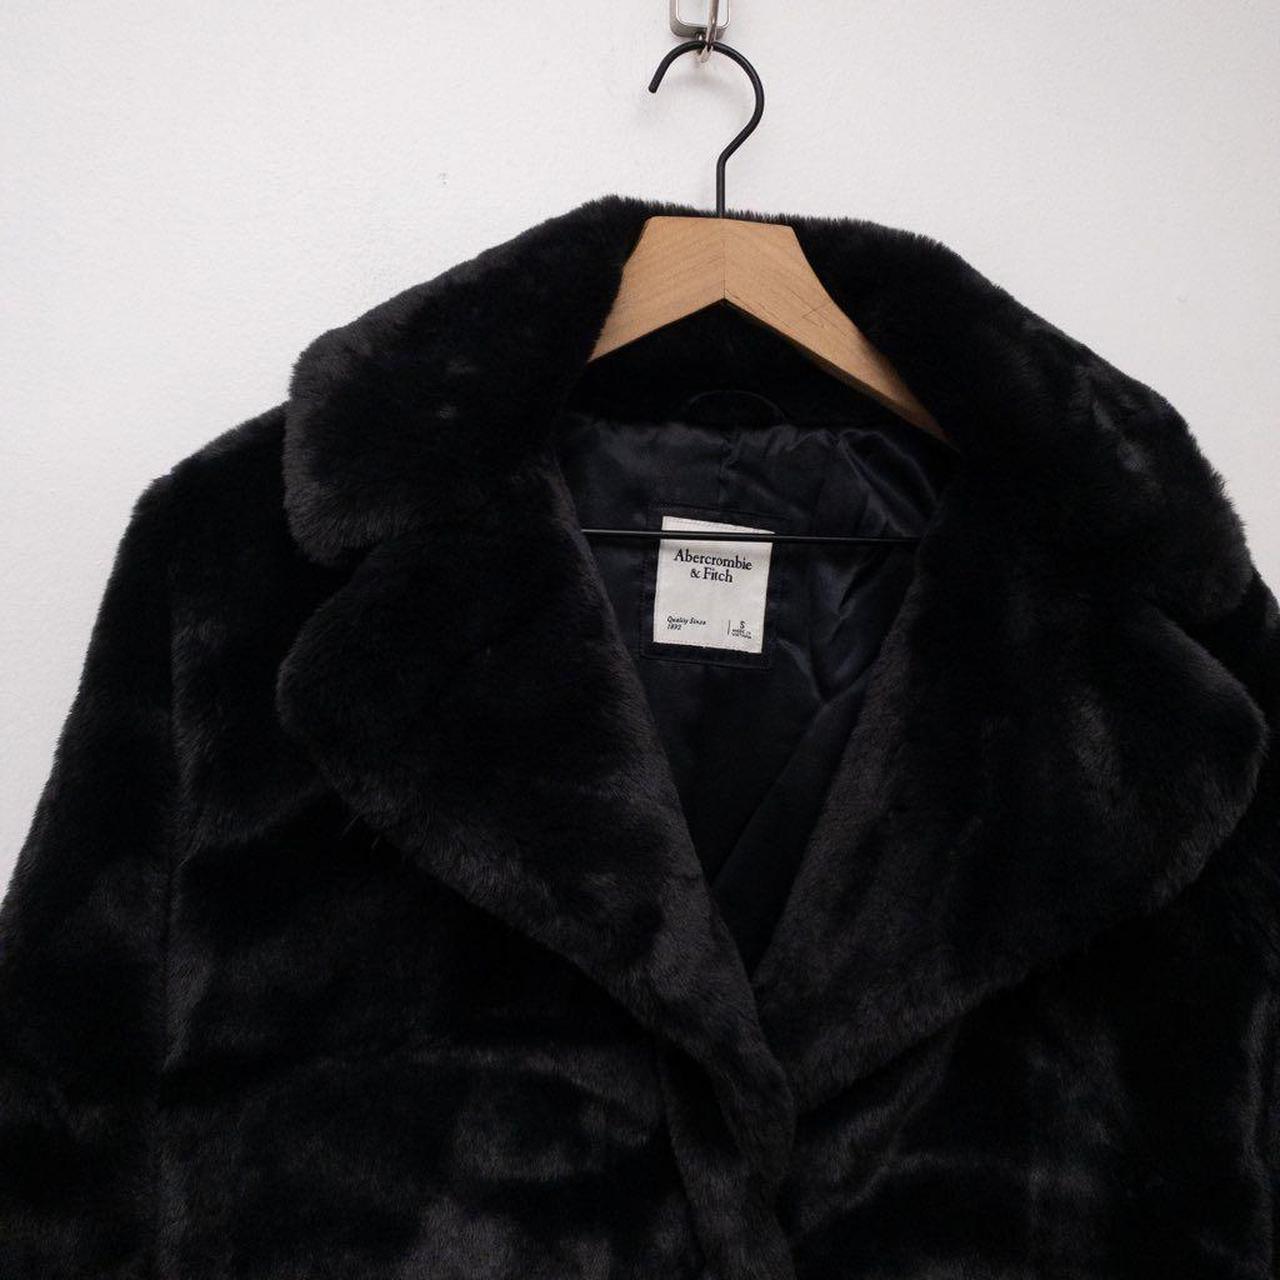 Abercrombie & Fitch Women's Black Coat (4)